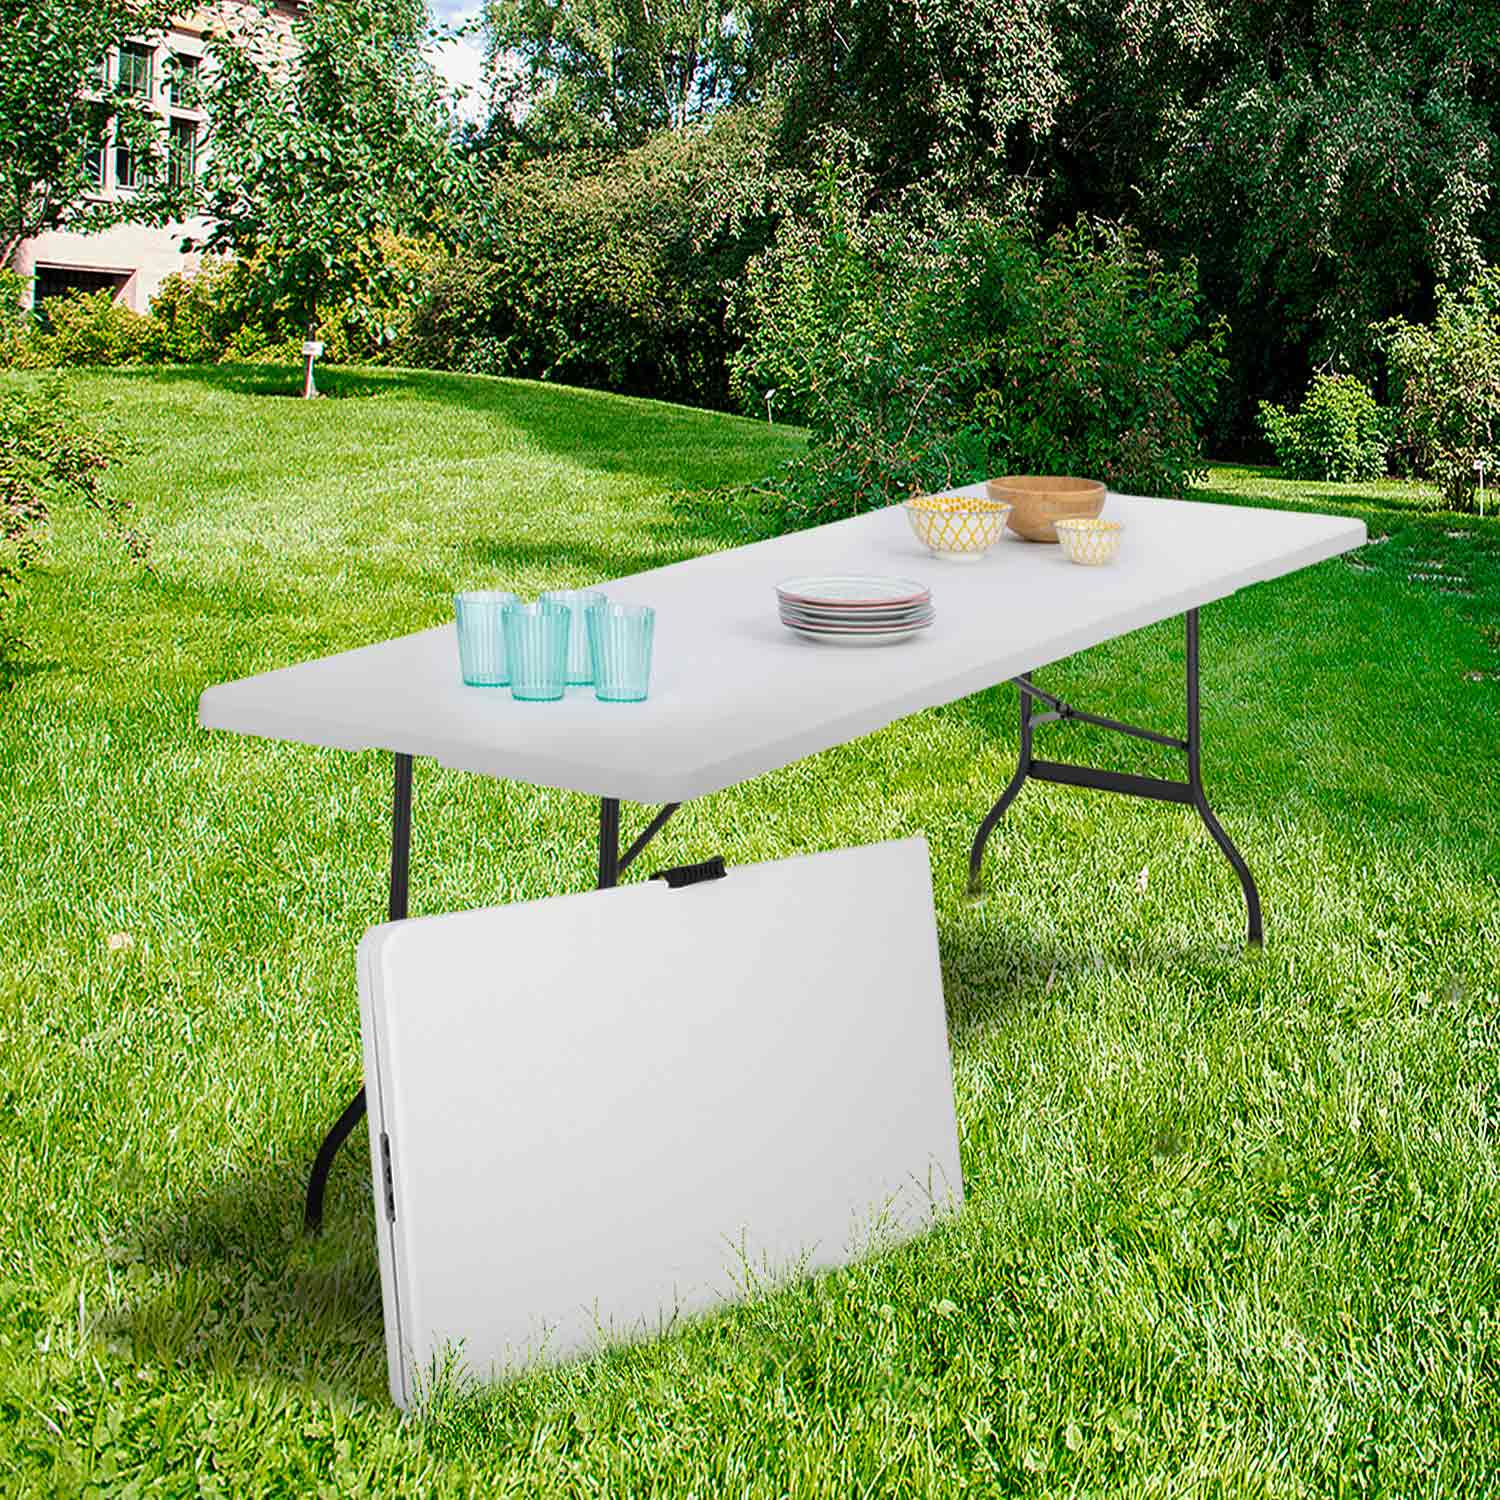 Lot de 2 tables pliantes camping blanches 180 cm